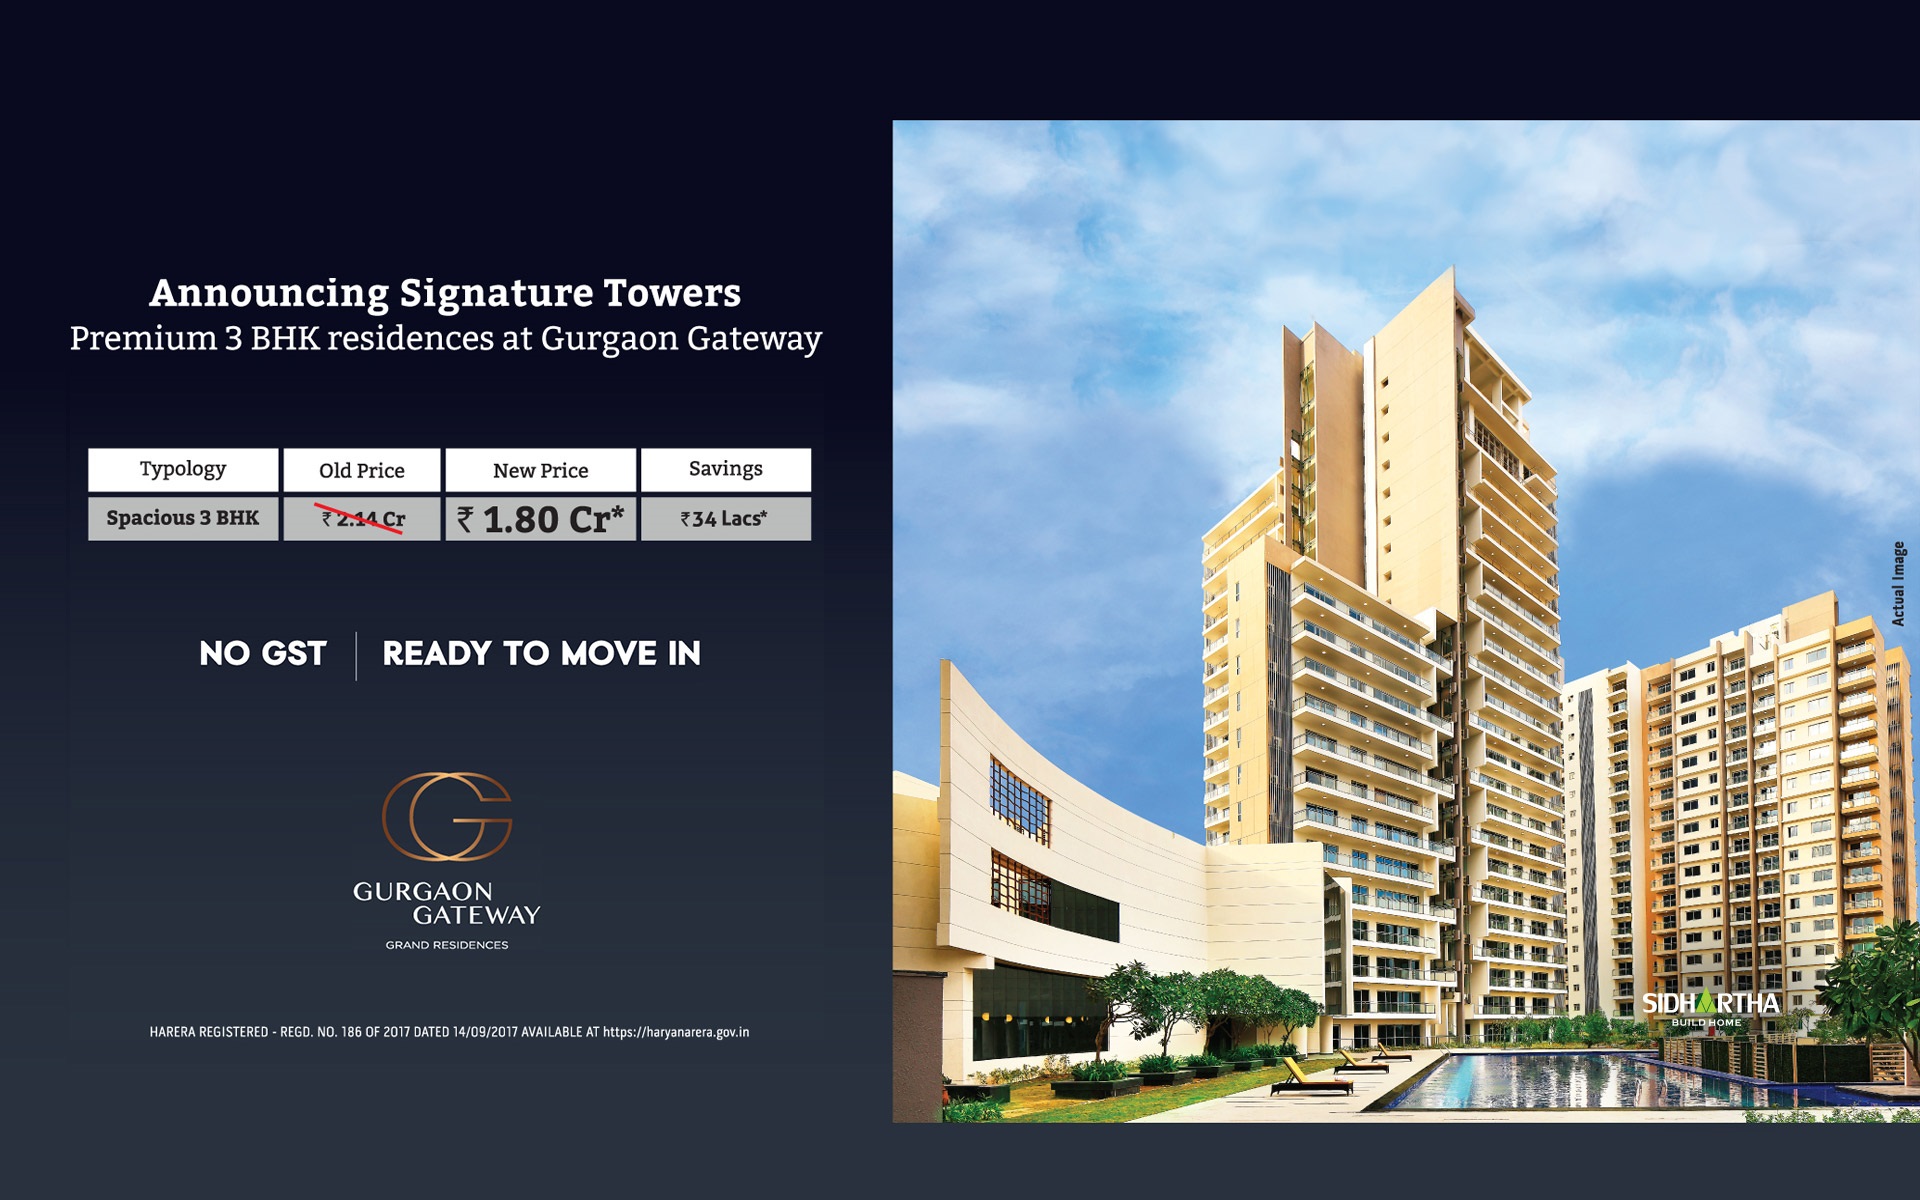 Premium 3 bhk residences at Rs. 1.80 Cr. at Tata Gurgaon Gateway in Gurgaon Update